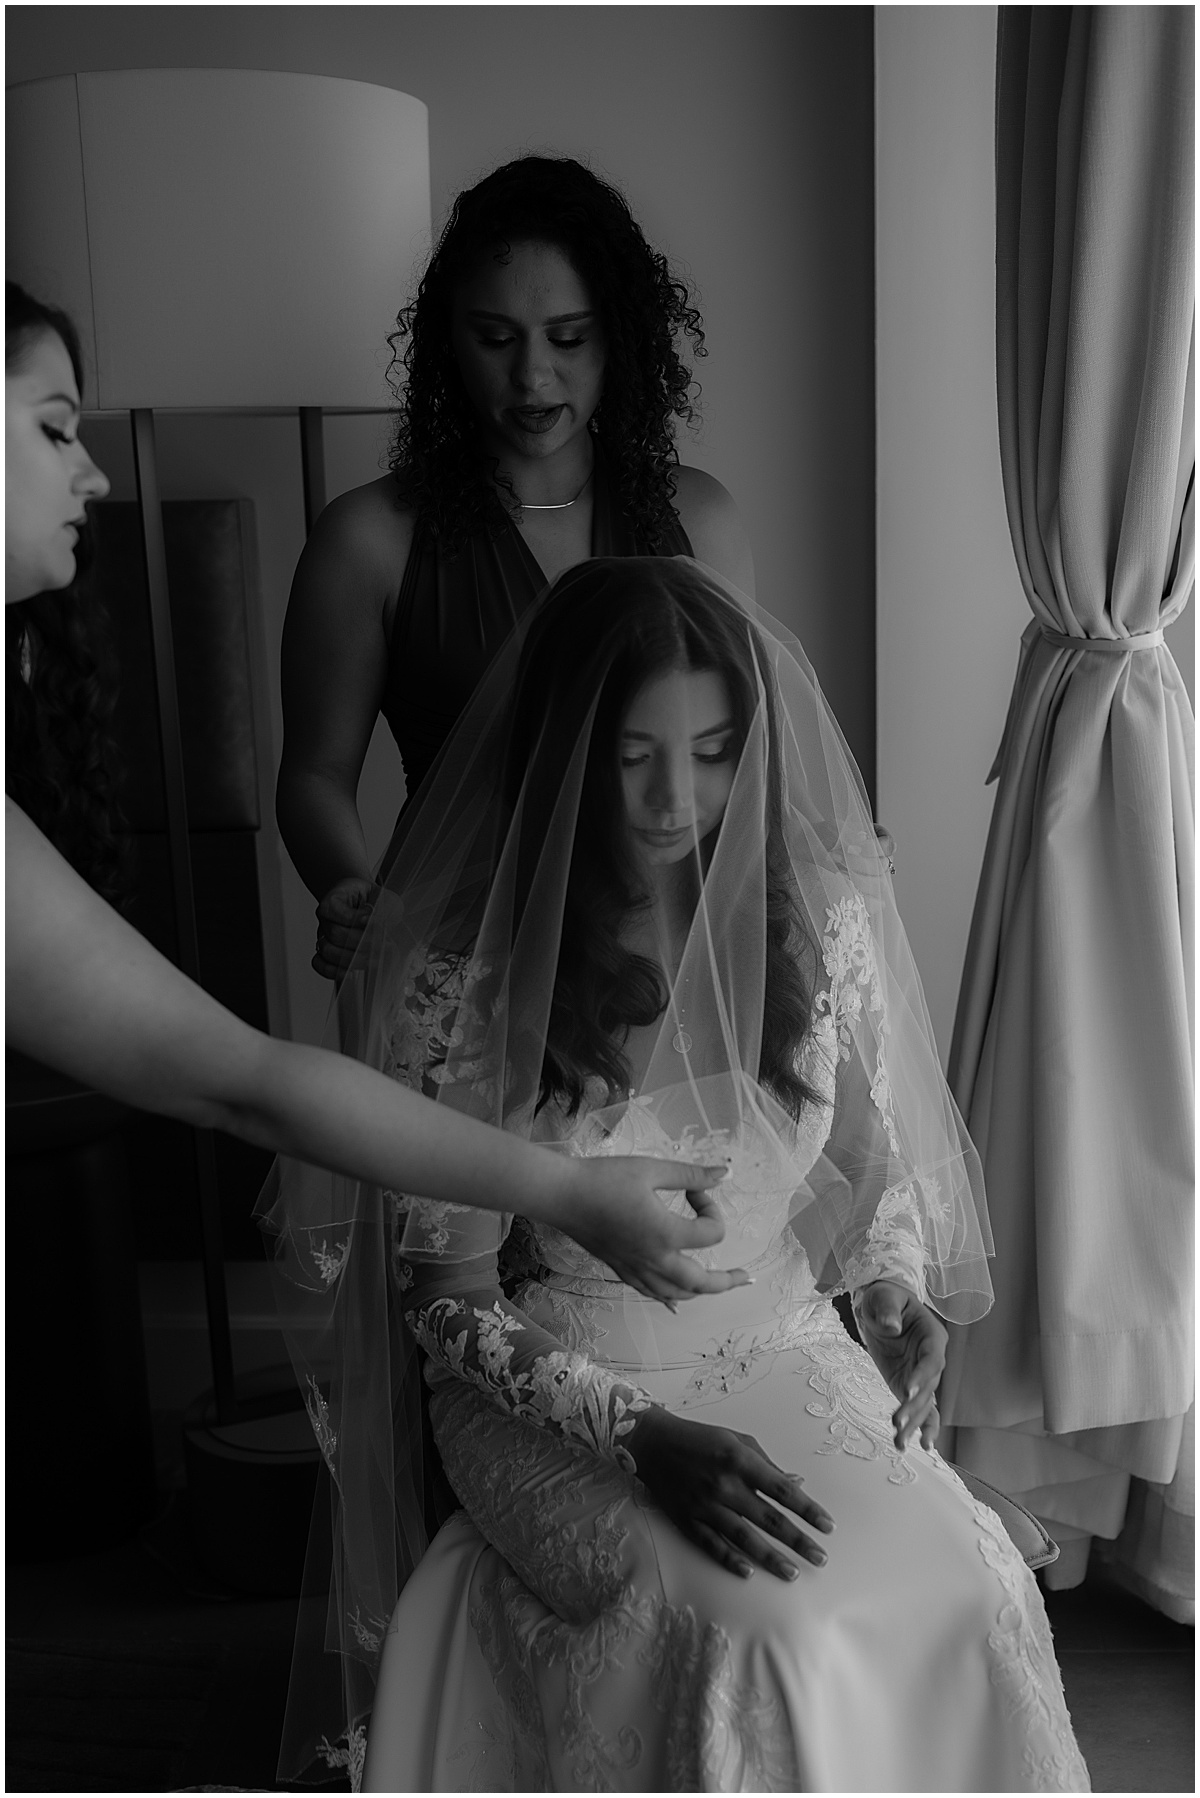 Black and White Wedding Photography | West Palm Beach, FL | Married in Palm Beach | www.marriedinpalmbeach.com | Vanessa Palomino Photography